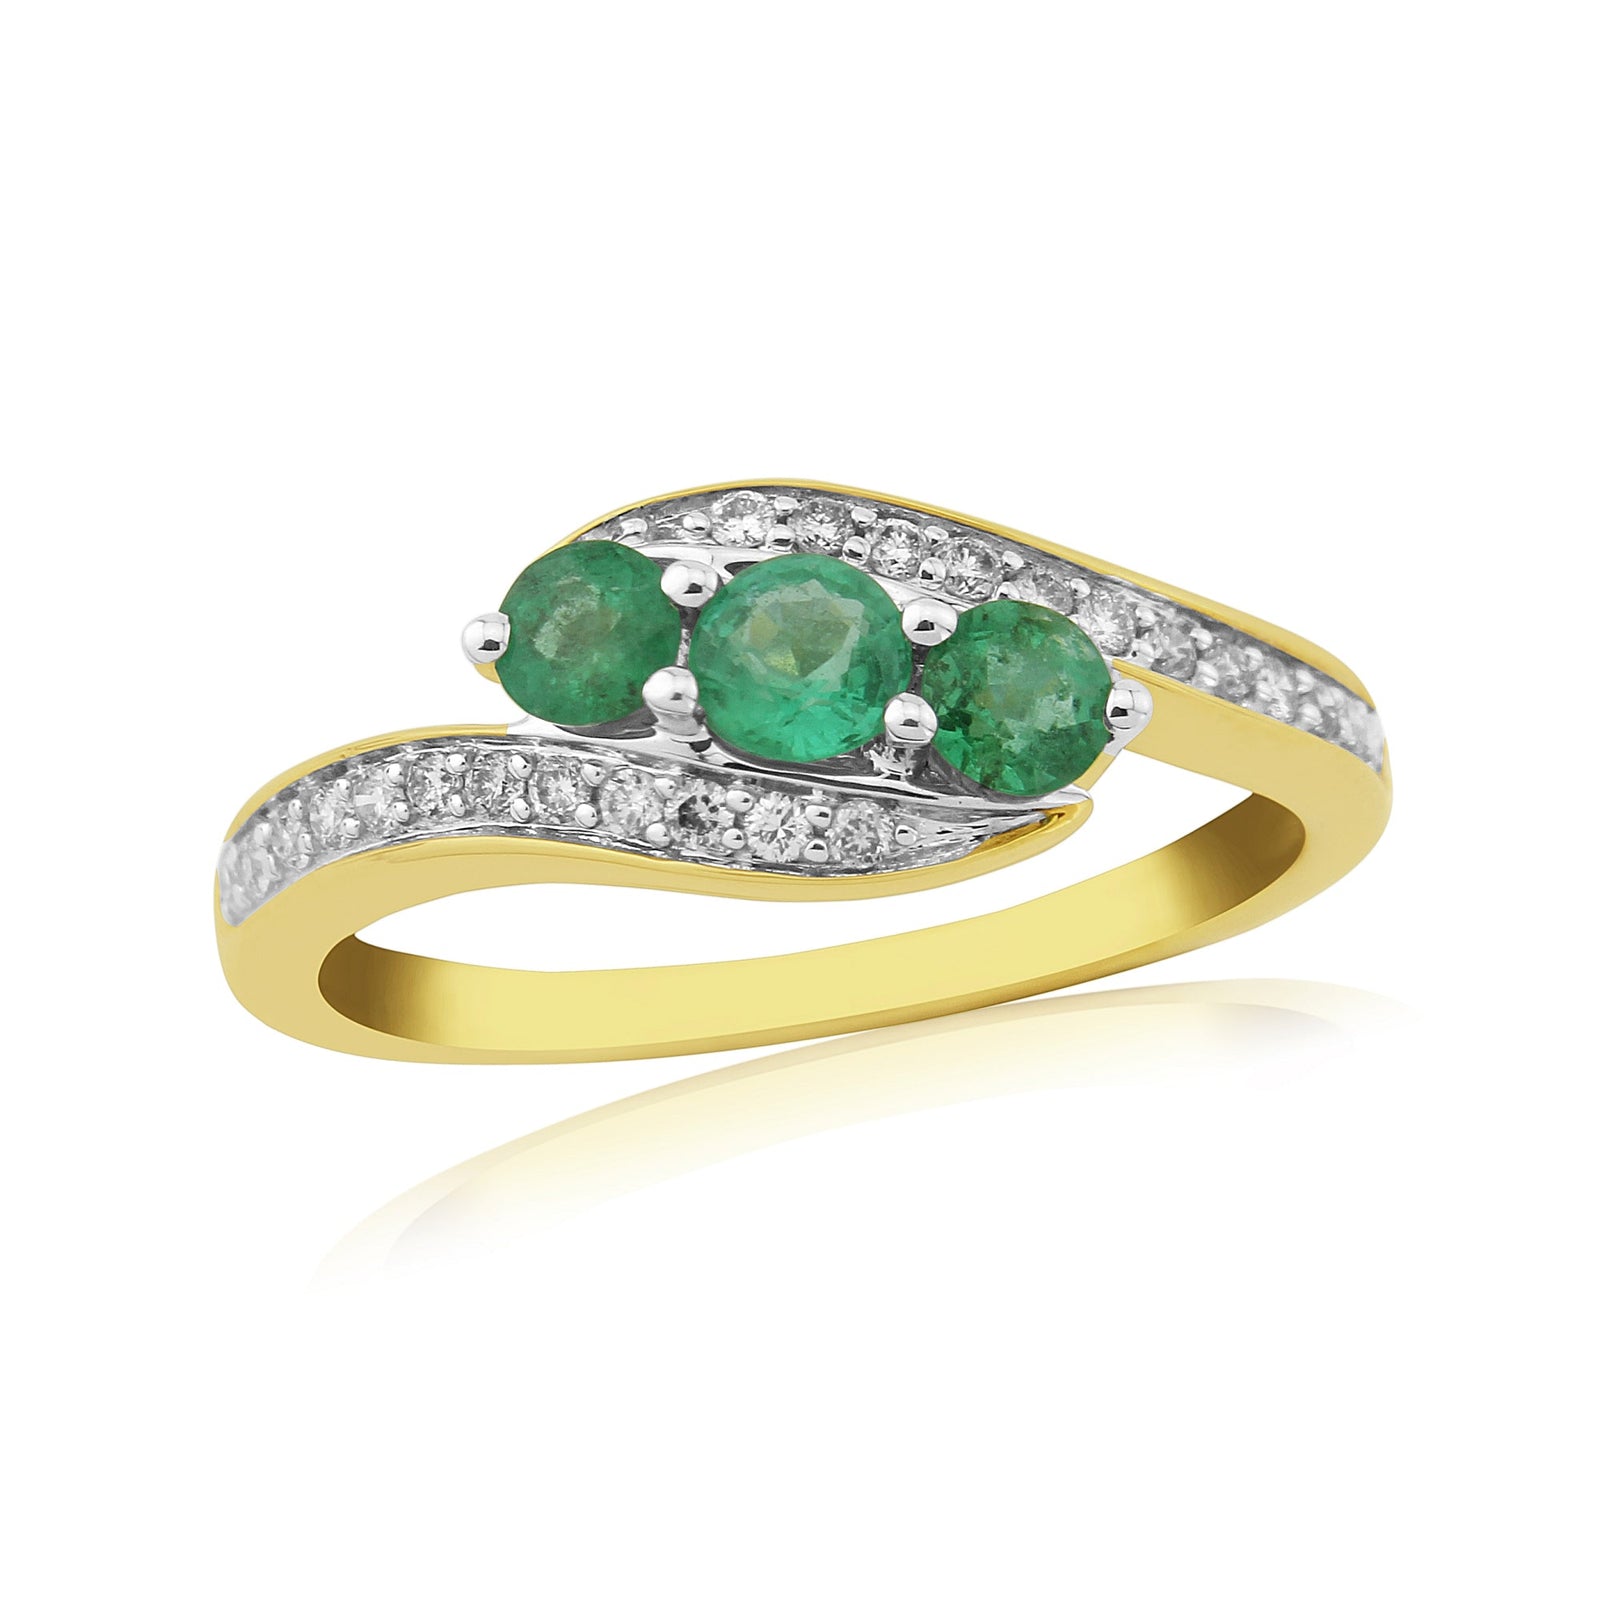 9ct gold three stone emerald ( 1 x 3.5mm & 2 x 3.25mm) & diamond cross-over ring 0.17ct